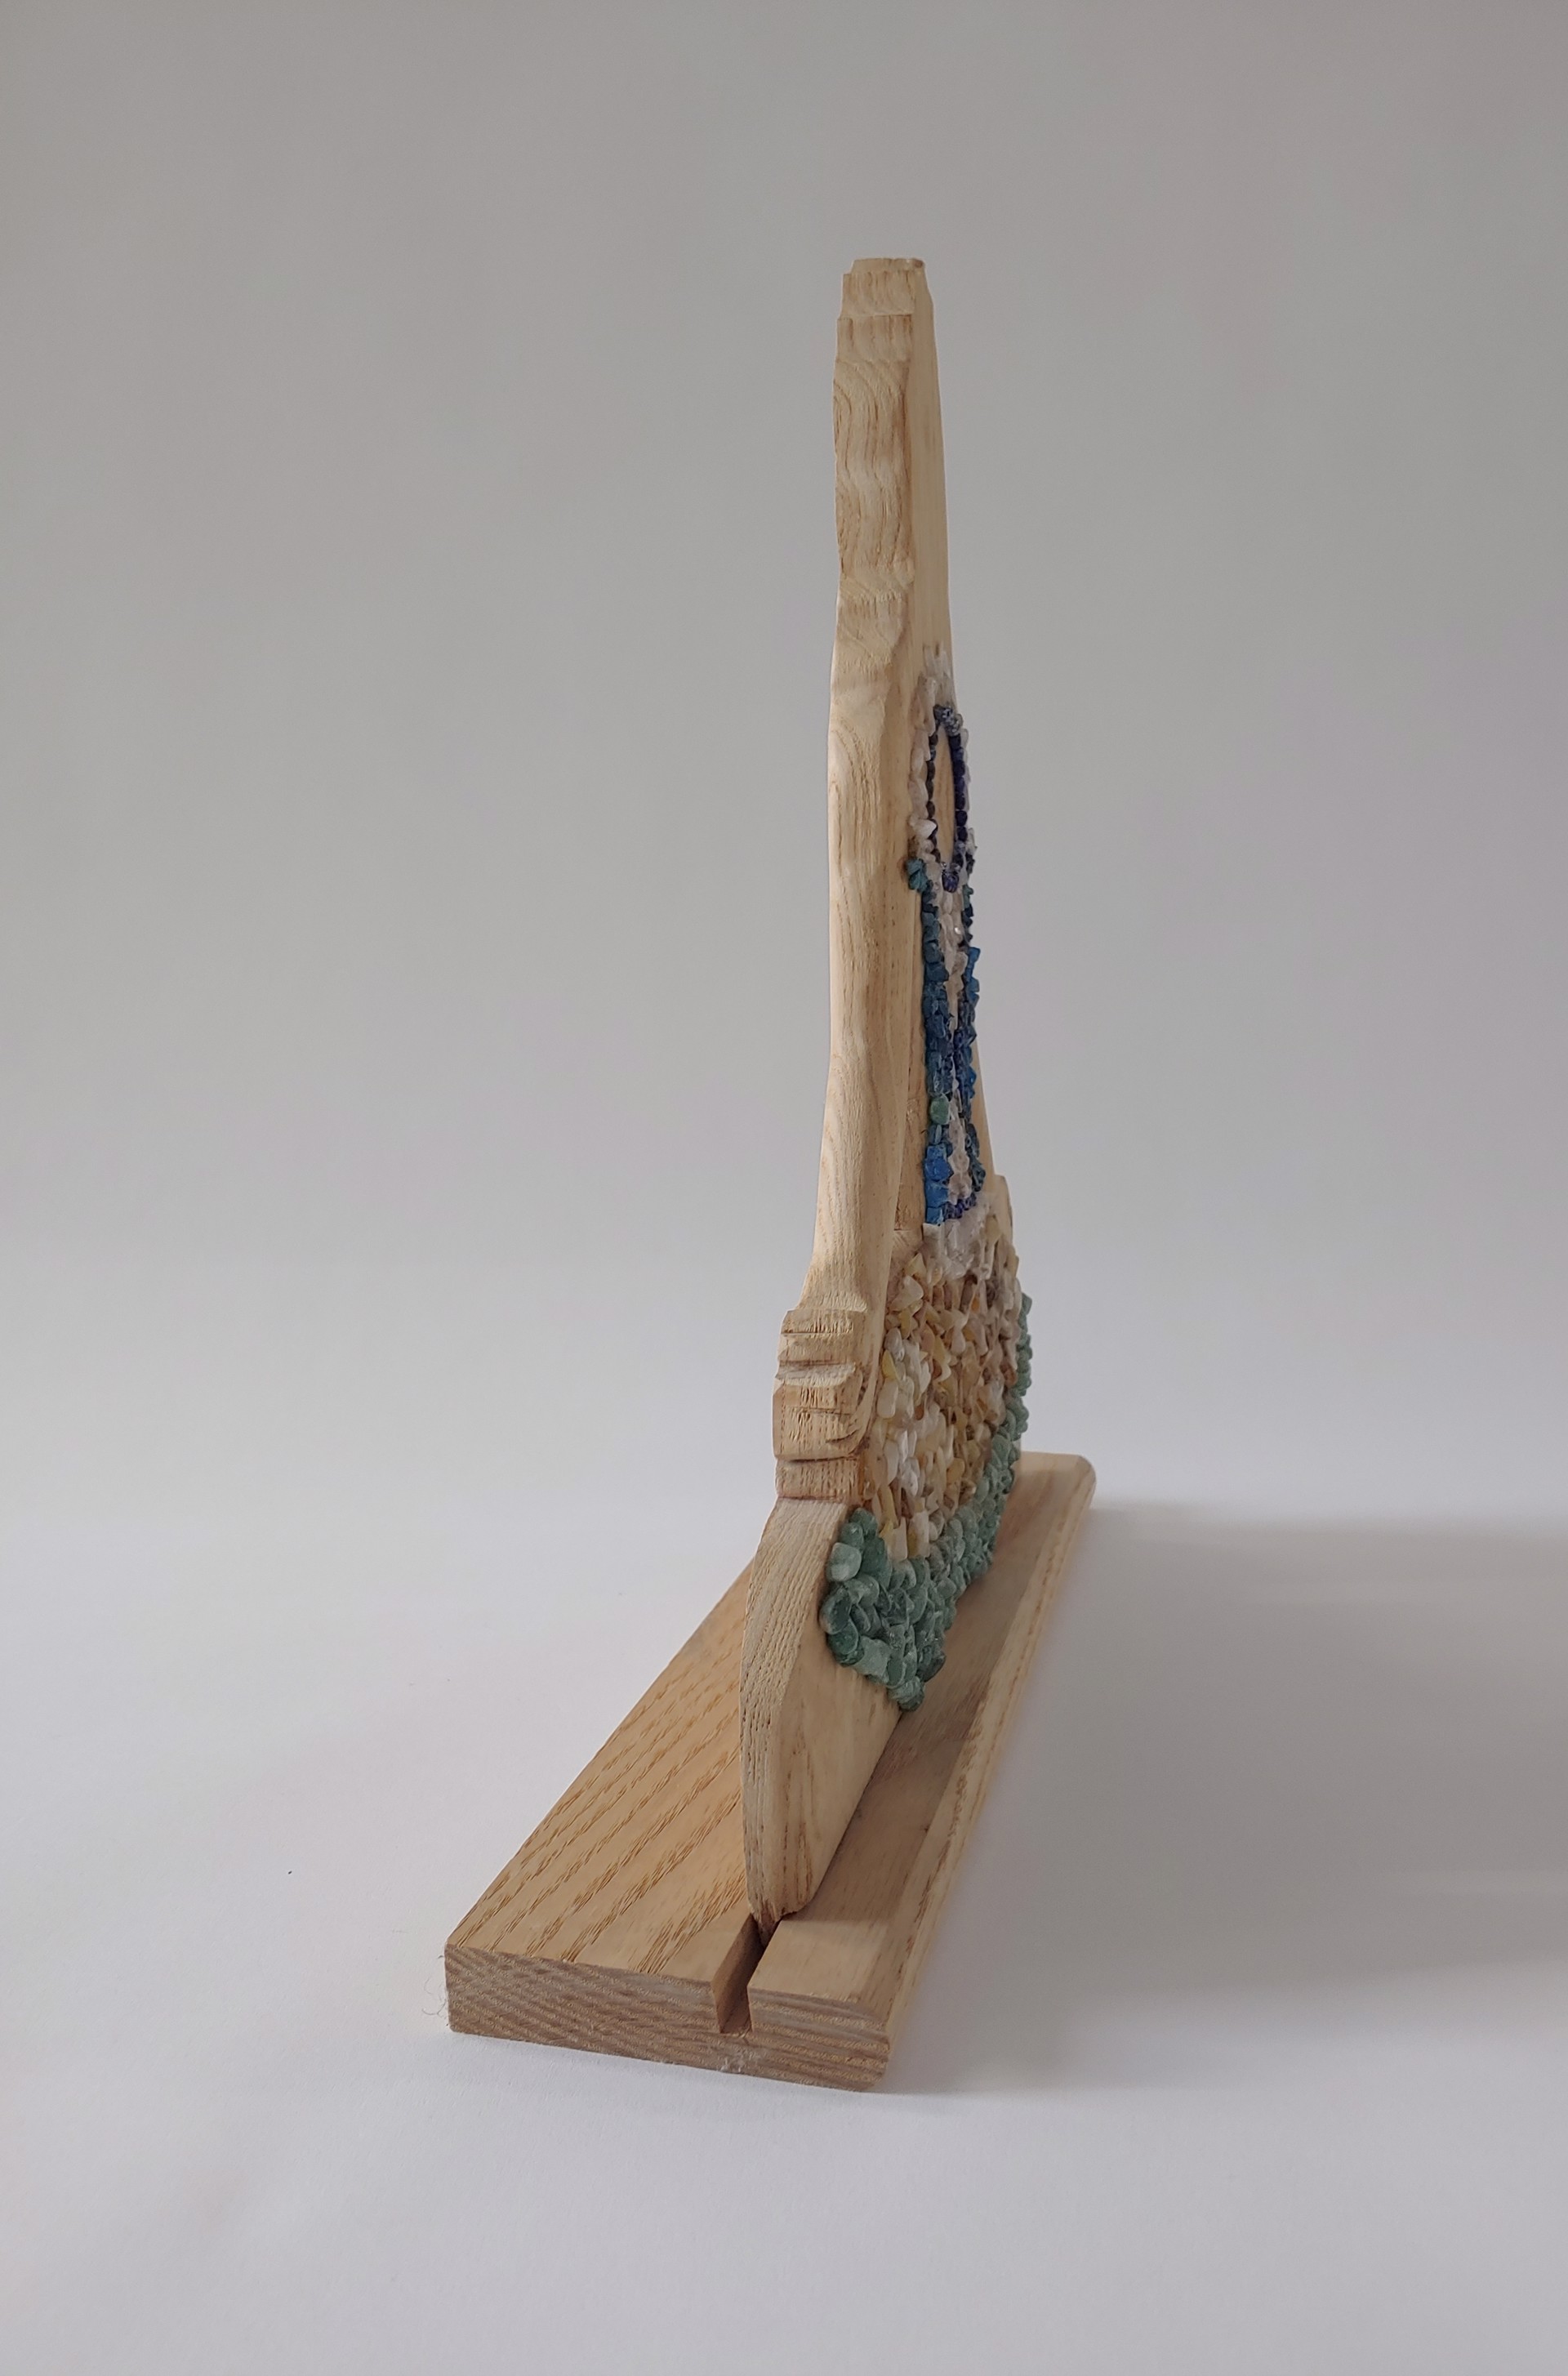 Bejeweled Goddess - Wood Sculpture by David Amdur